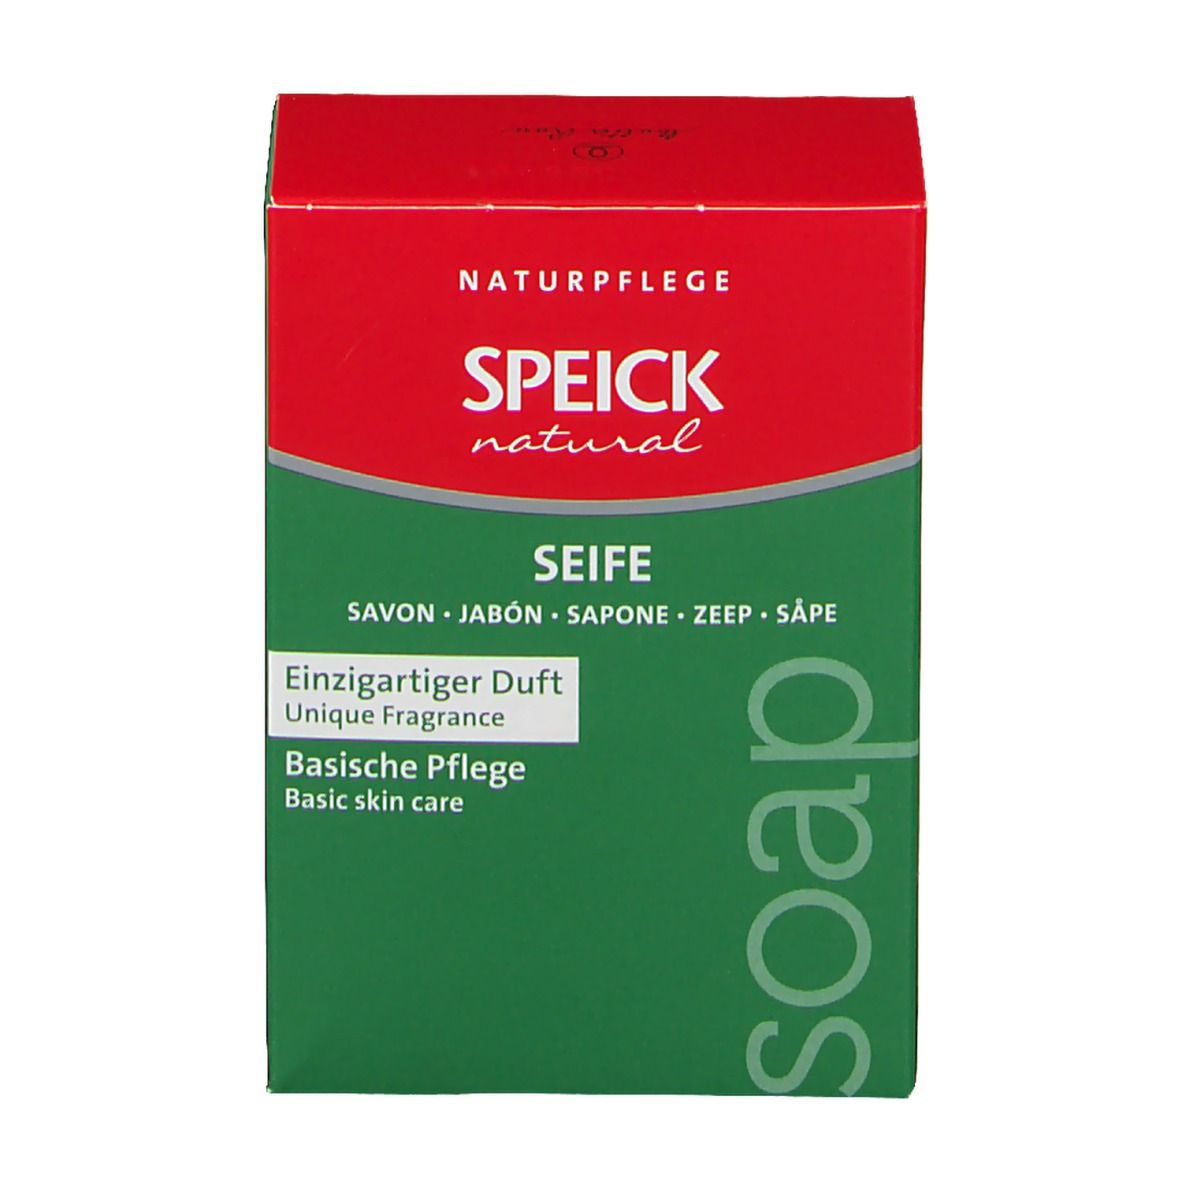 SPEICK Natural Seife